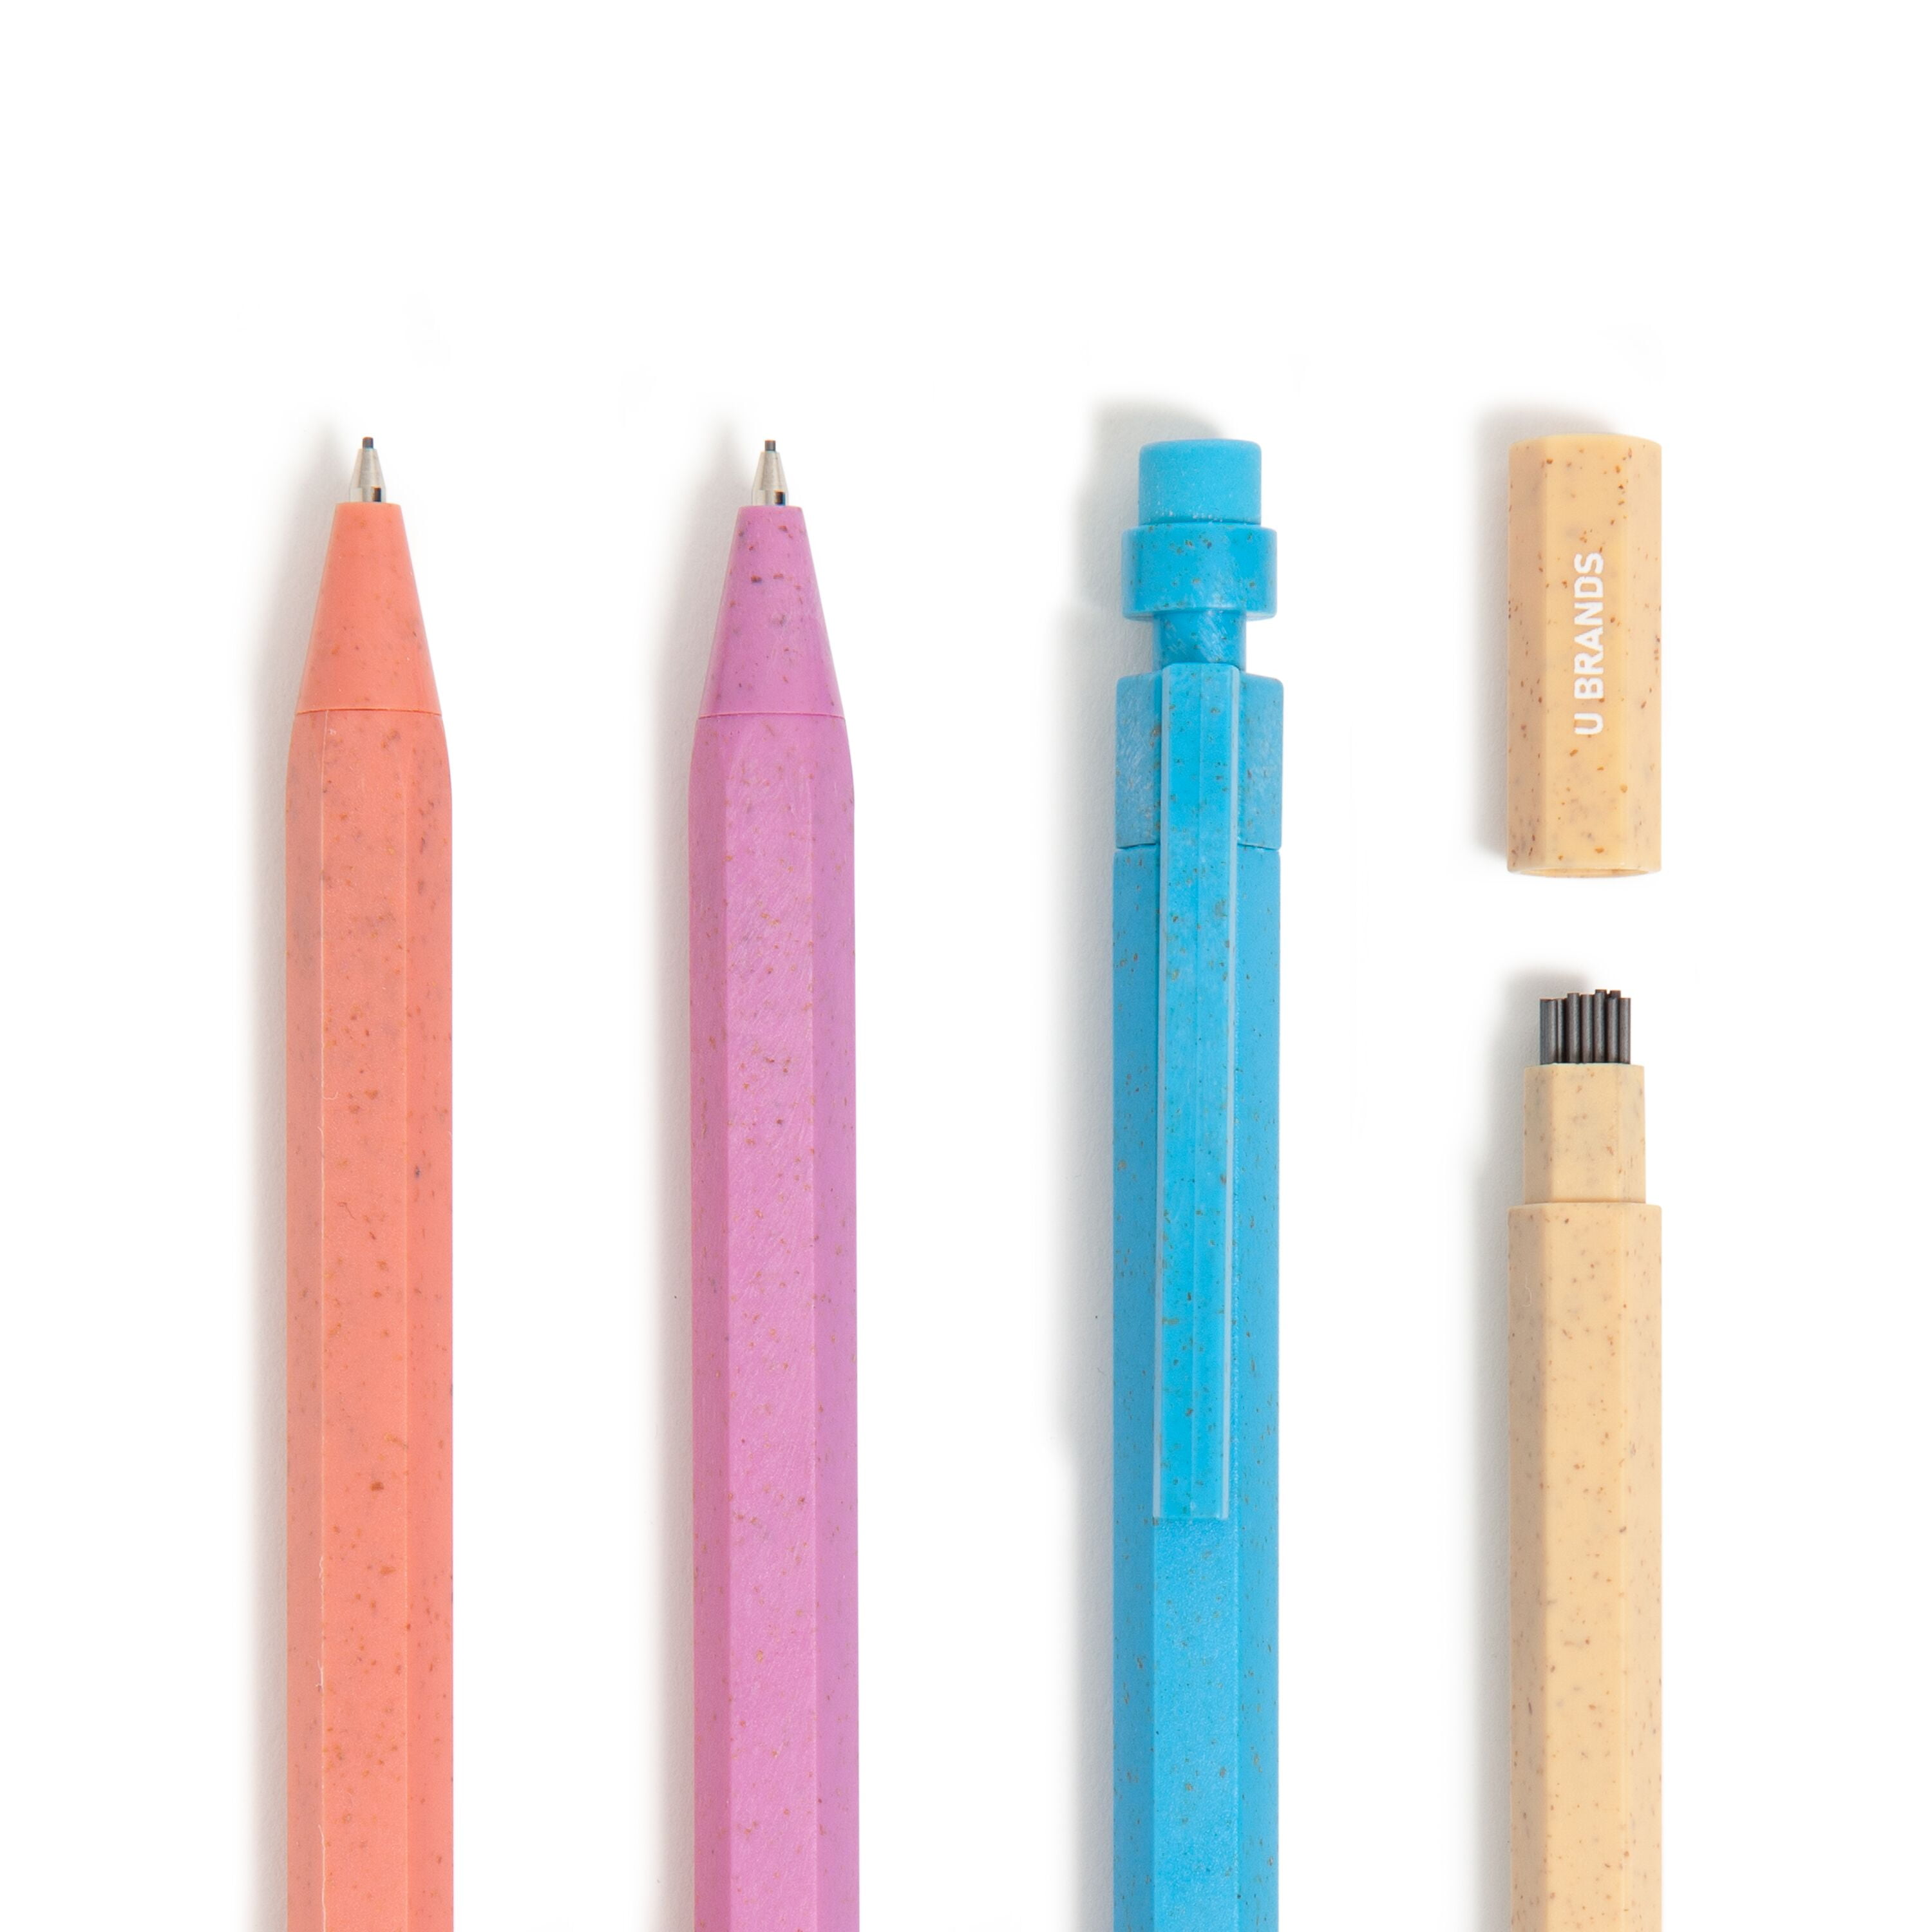 Flowery Nail Whitening Pencil – Universal Companies